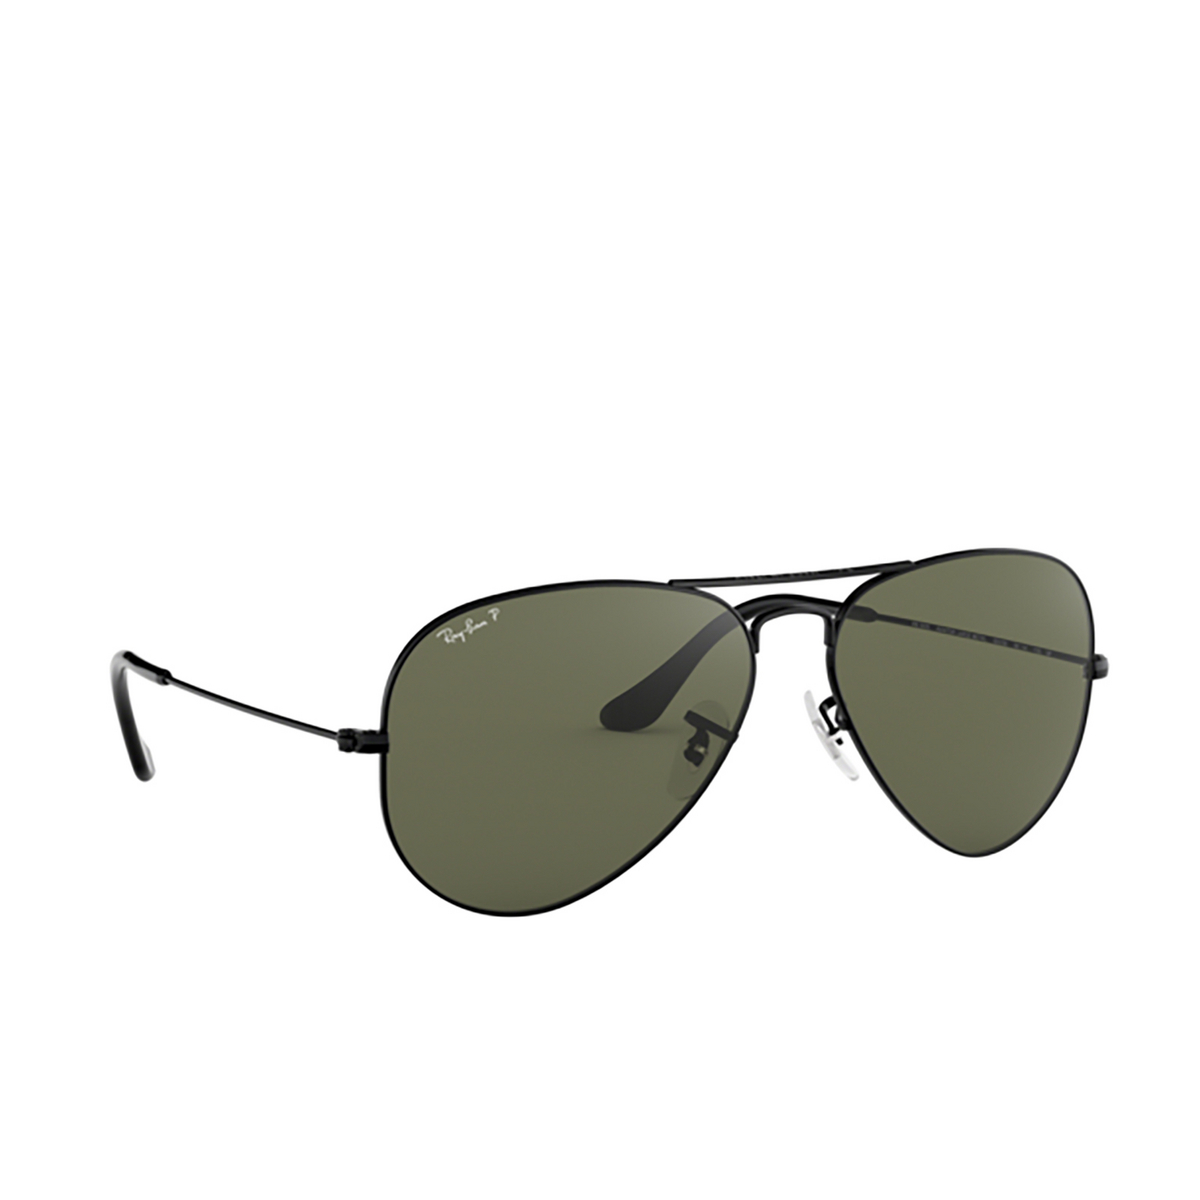 Ray-Ban AVIATOR LARGE METAL Sunglasses 002/58 Black - three-quarters view